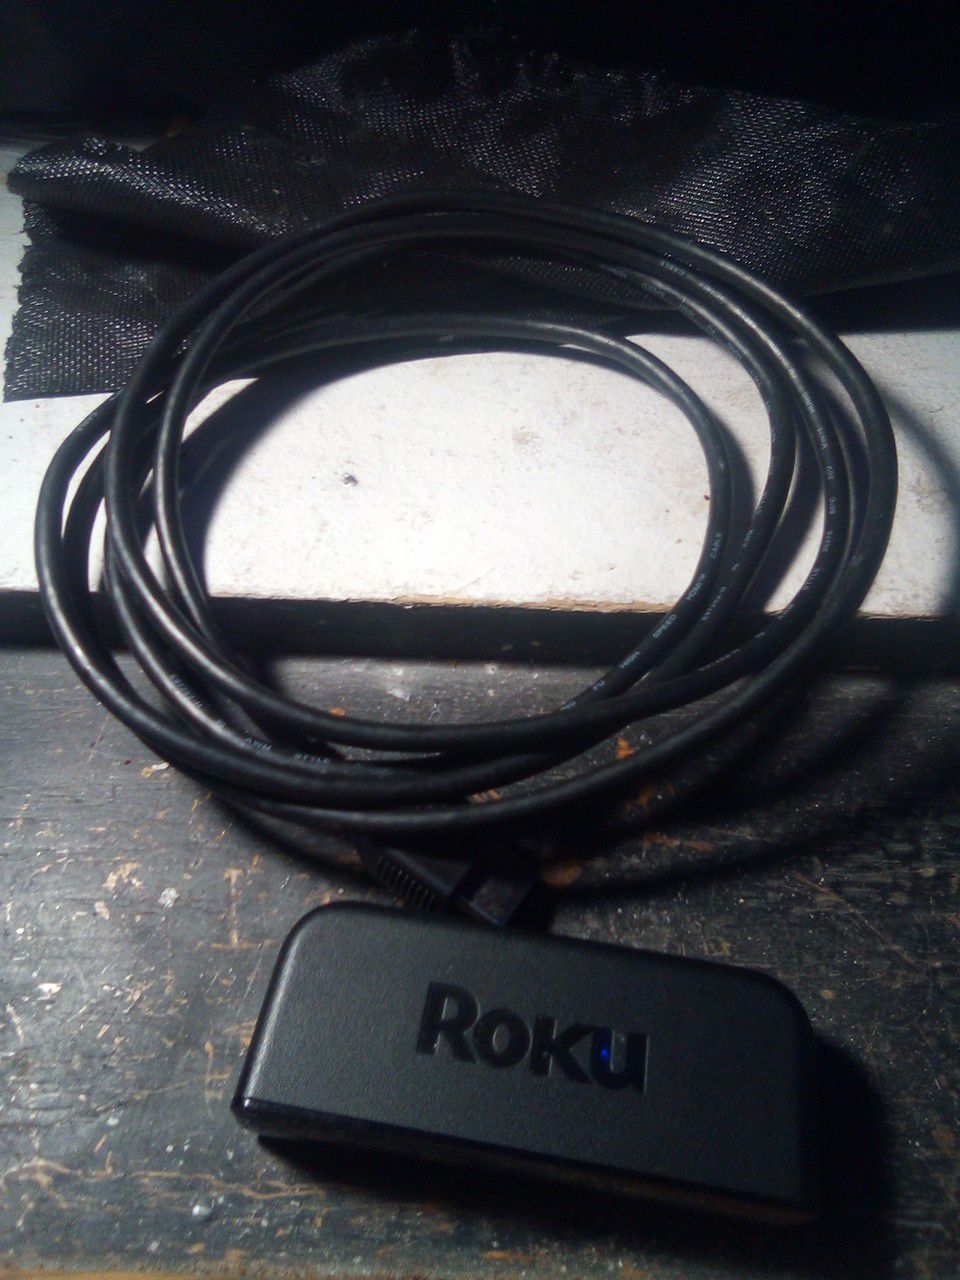 Roku streaming device